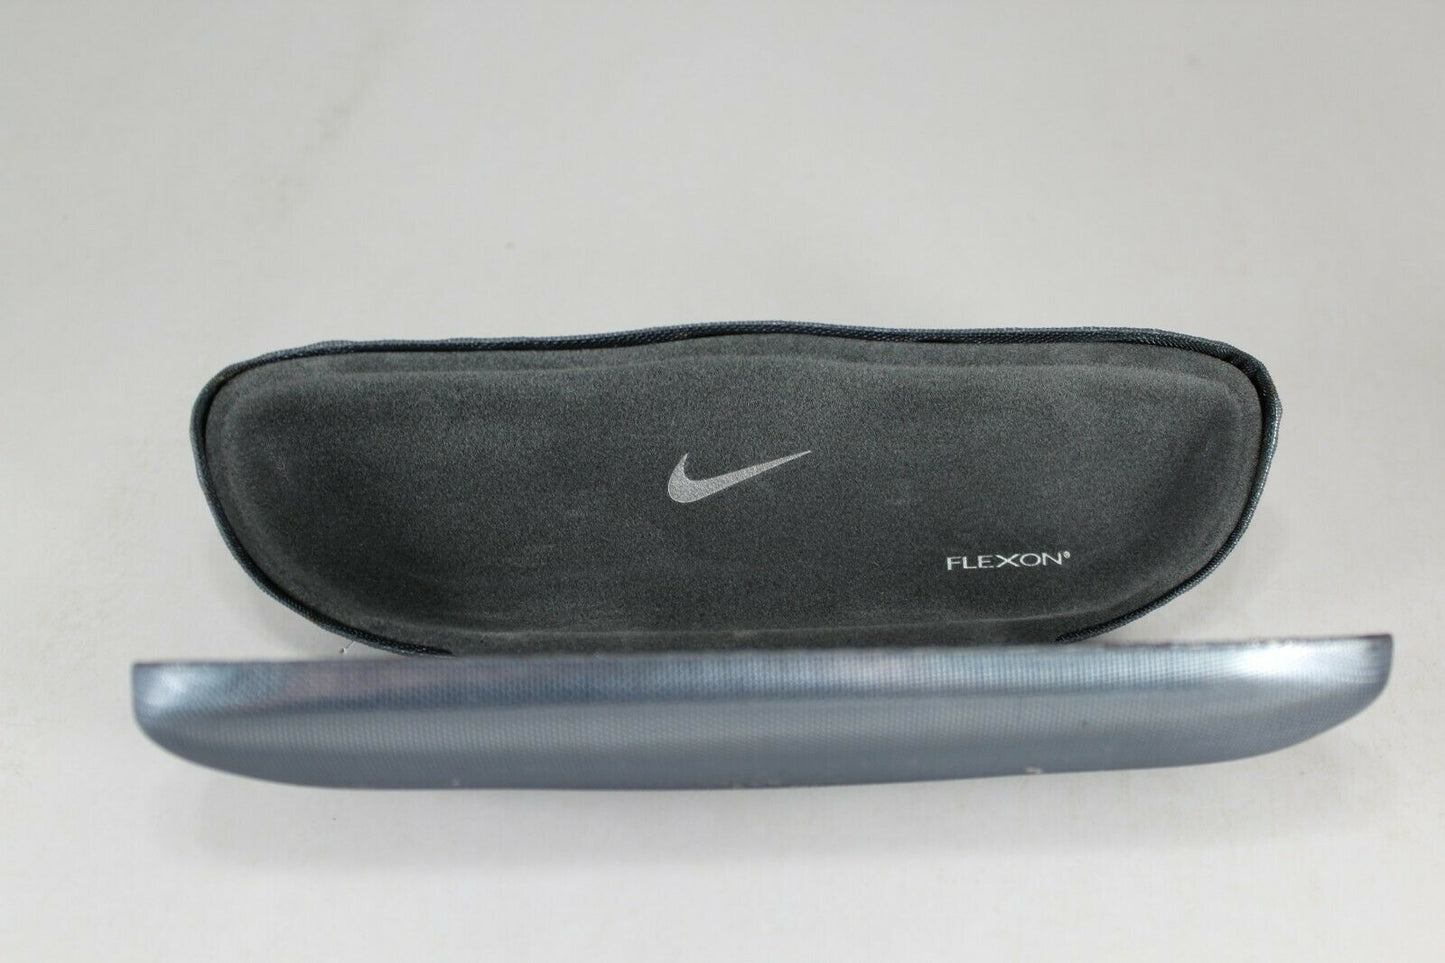 Nike 7242-002 53mm New Eyeglasses